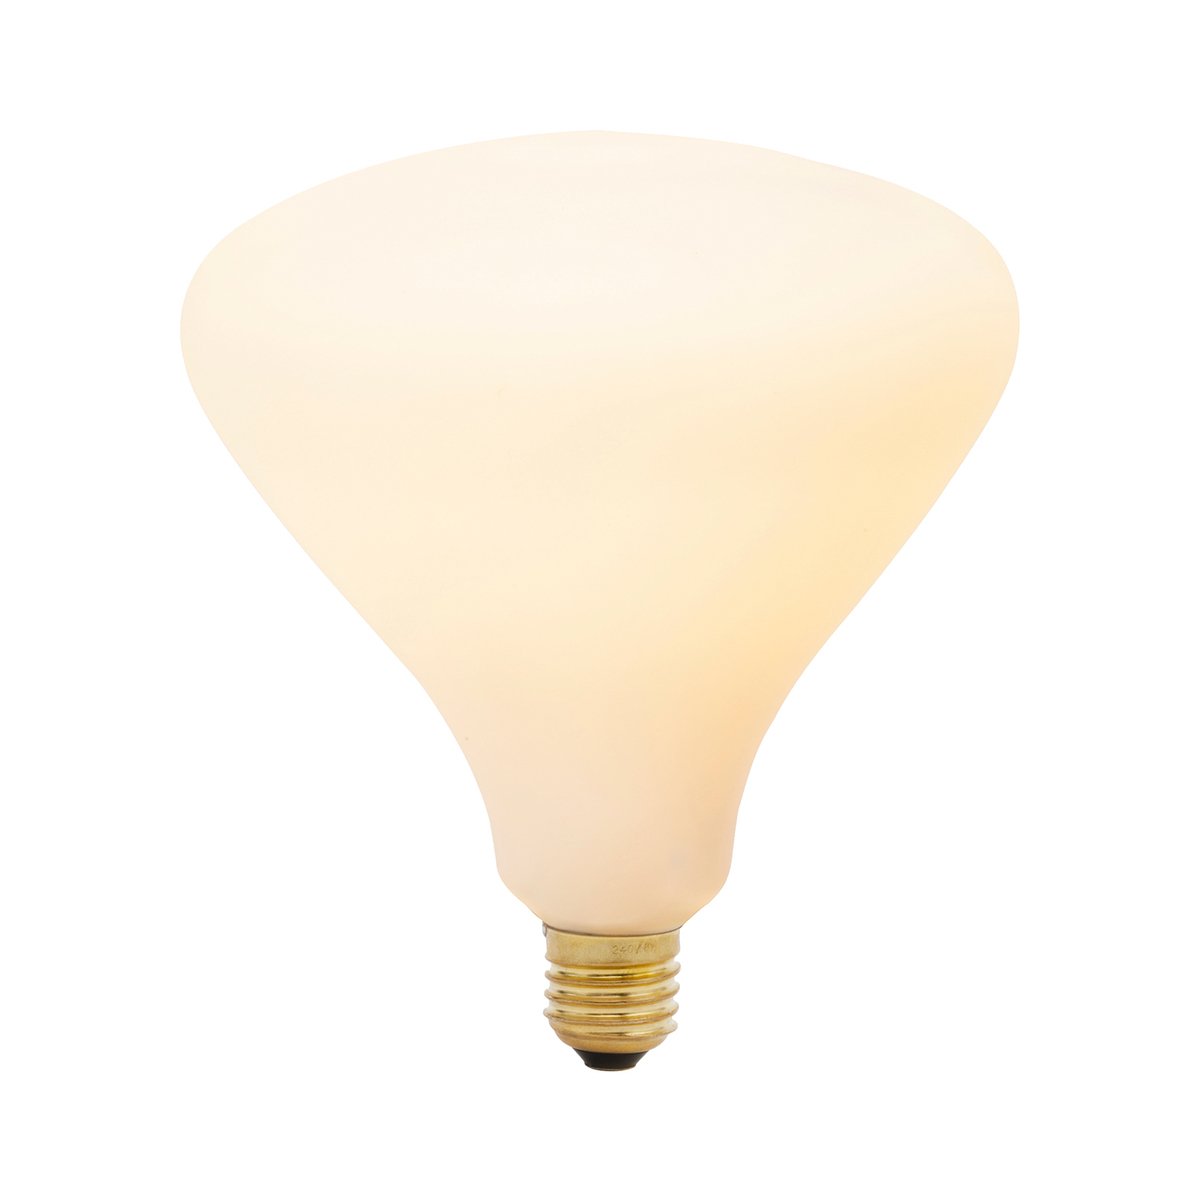 Tala Noma Led Bulb 6w E27 Dimmable, Round Light Bulbs Vanity